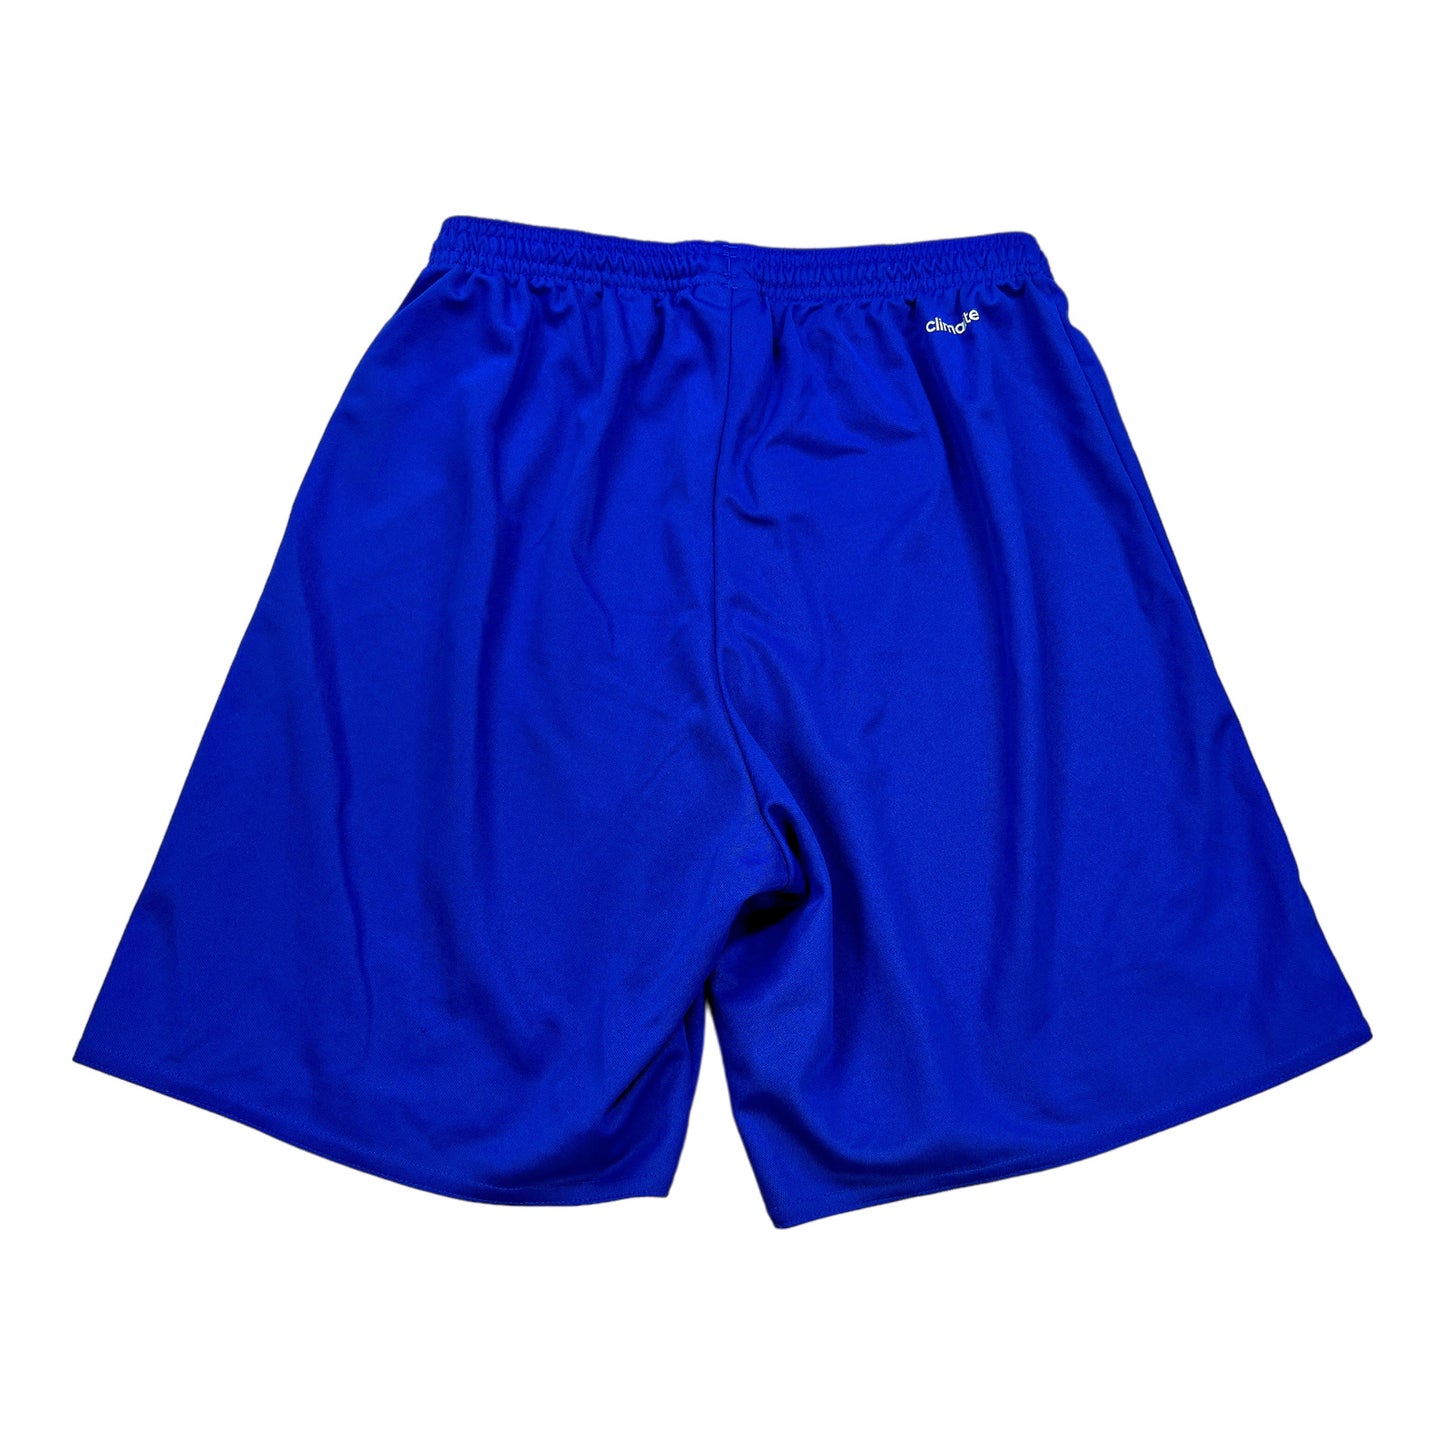 Adidas Men’s Blue Climalite Parma 16 Athletic Shorts - S